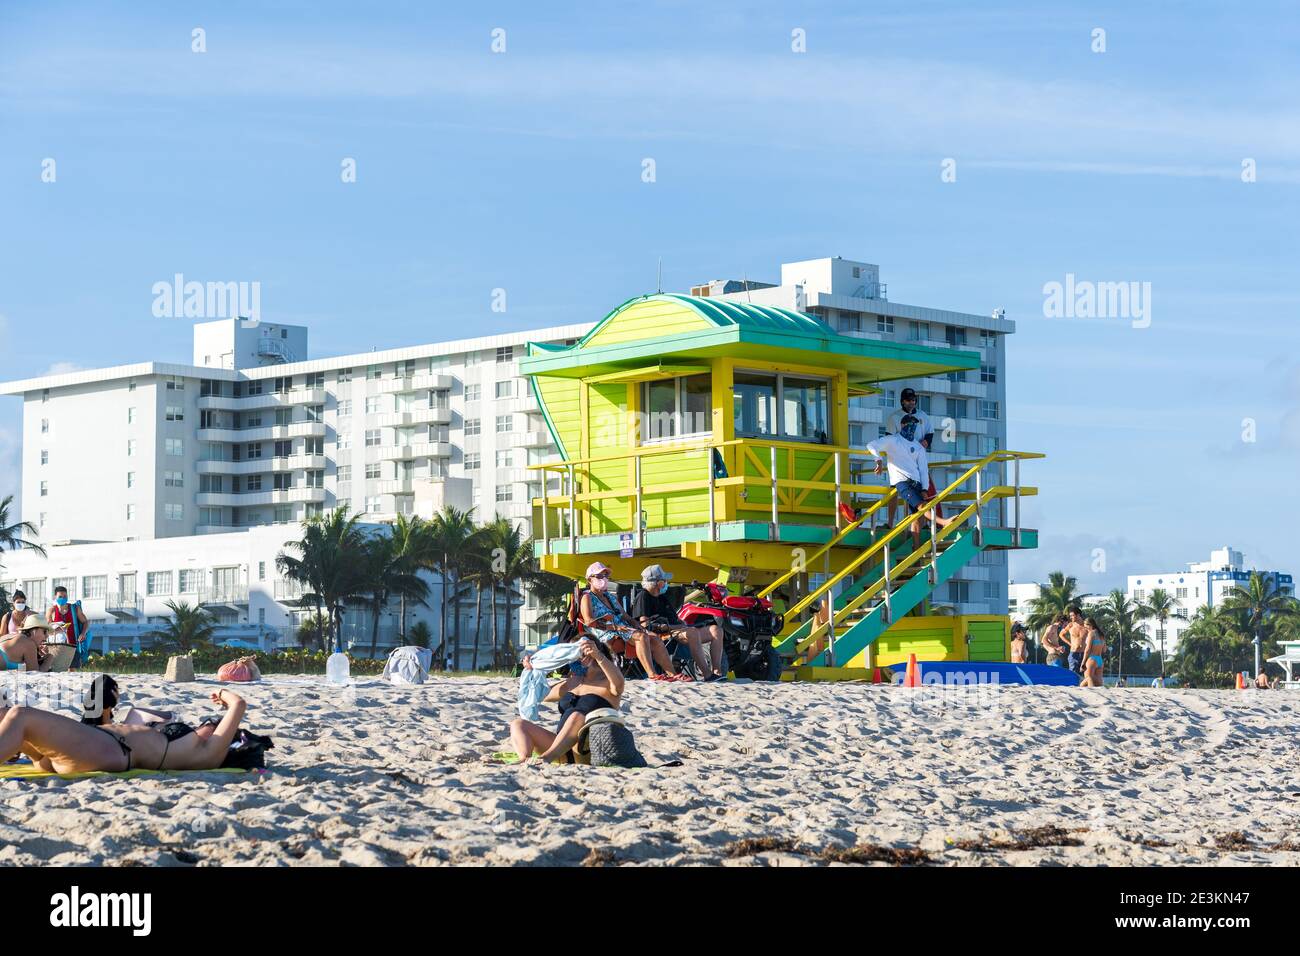 Miami, Florida - January 2, 2021: People Sunbathing in Miami Beach. Stock Photo